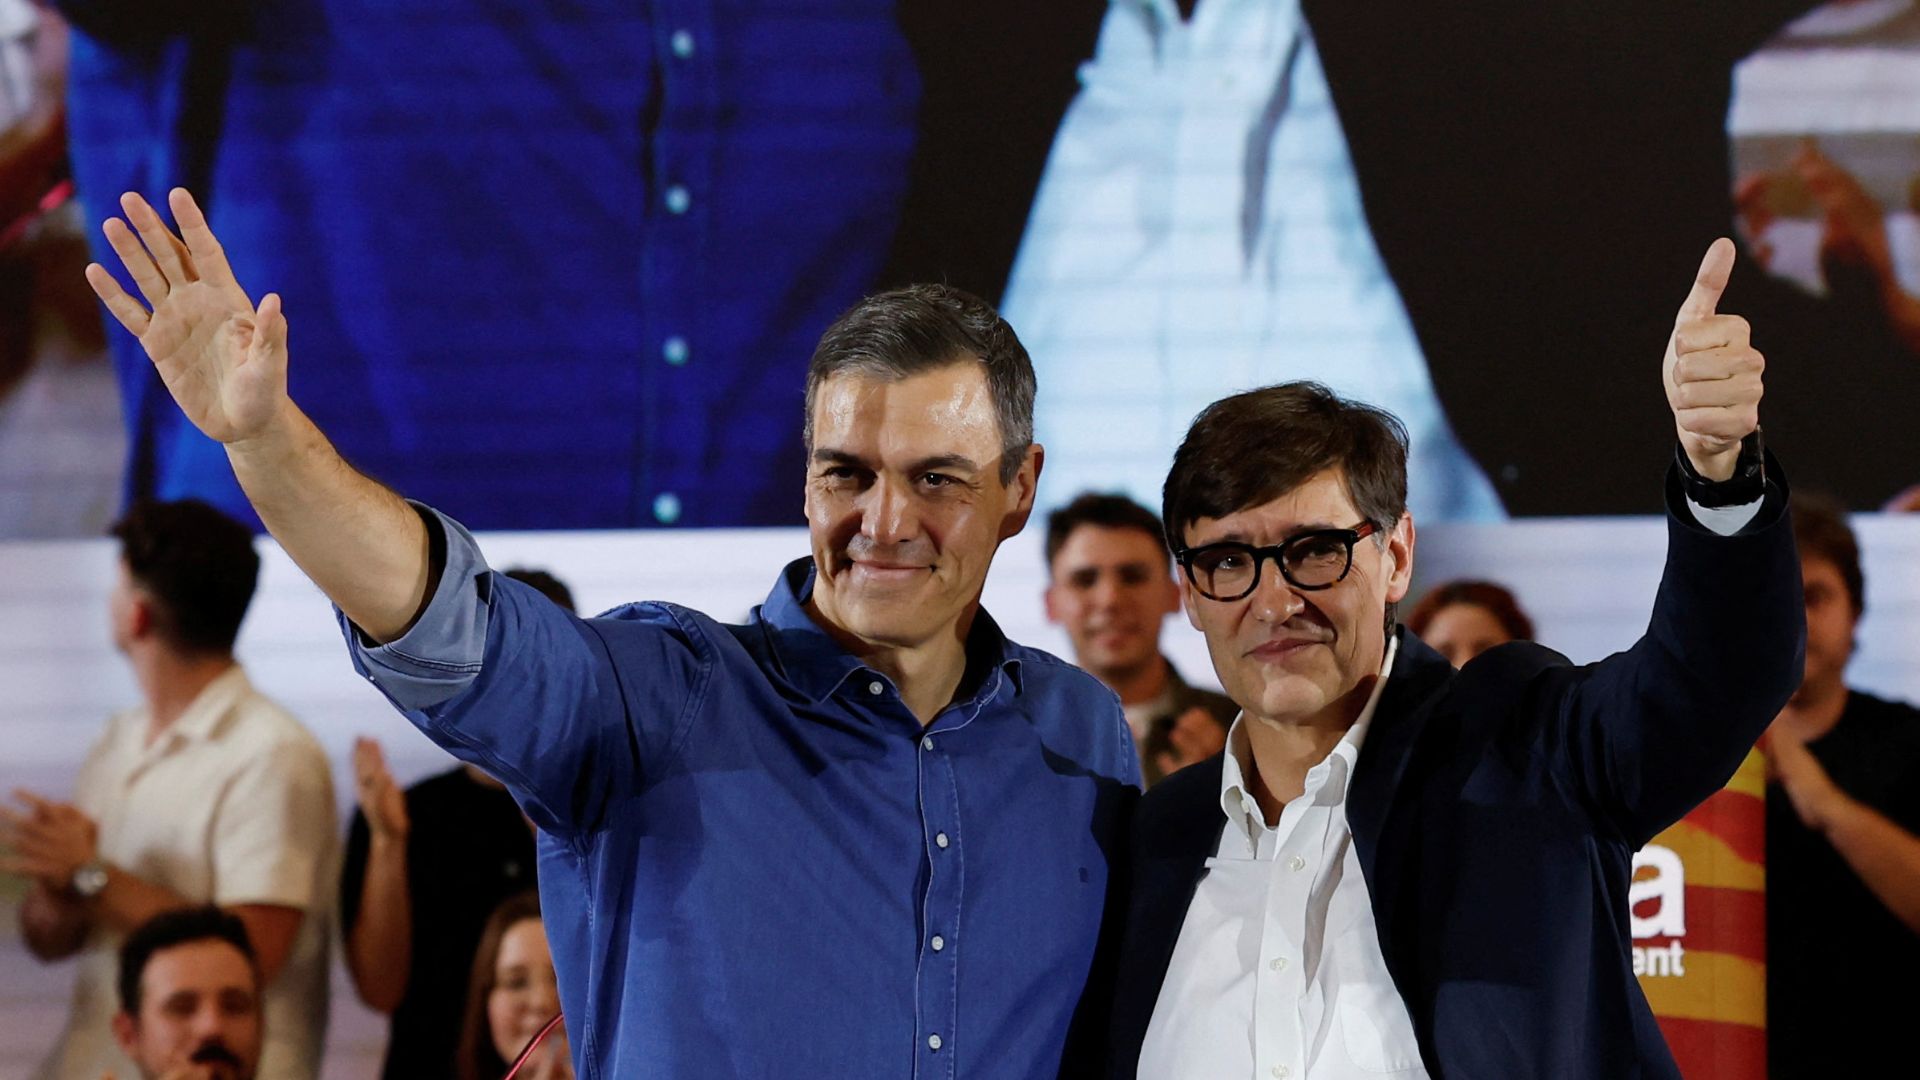 Spain's Prime Minister Pedro Sanchez (left) and Salvador Illa, Socialist candidate for Catalan elections, at campaign event in Sant Boi de Llobregat. /Albert Gea/Reuters